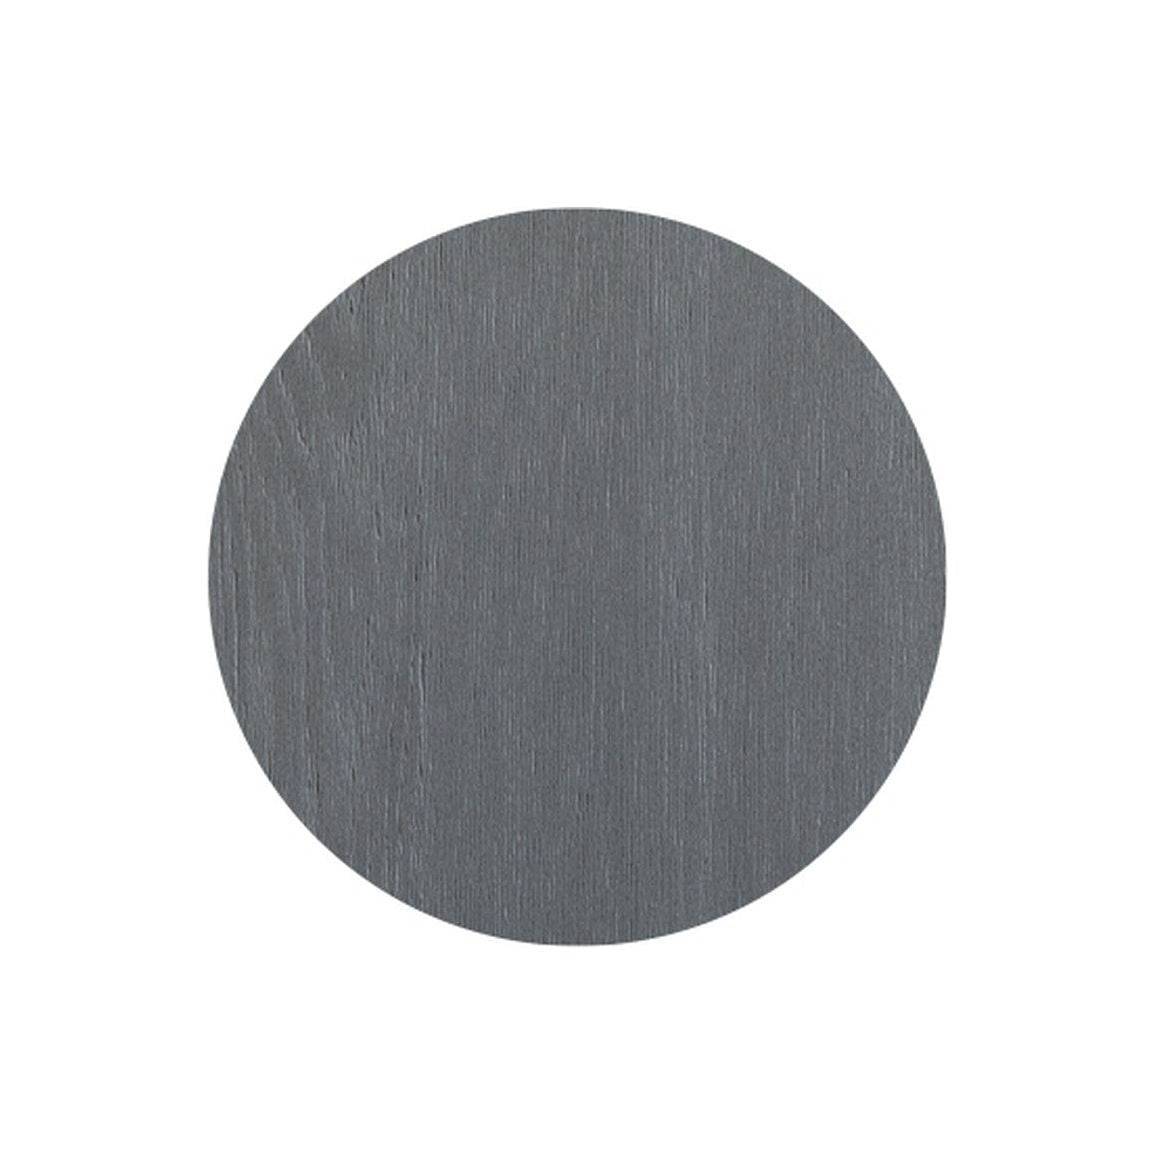 Panel final Berry 900x330 mm - Ceniza gris